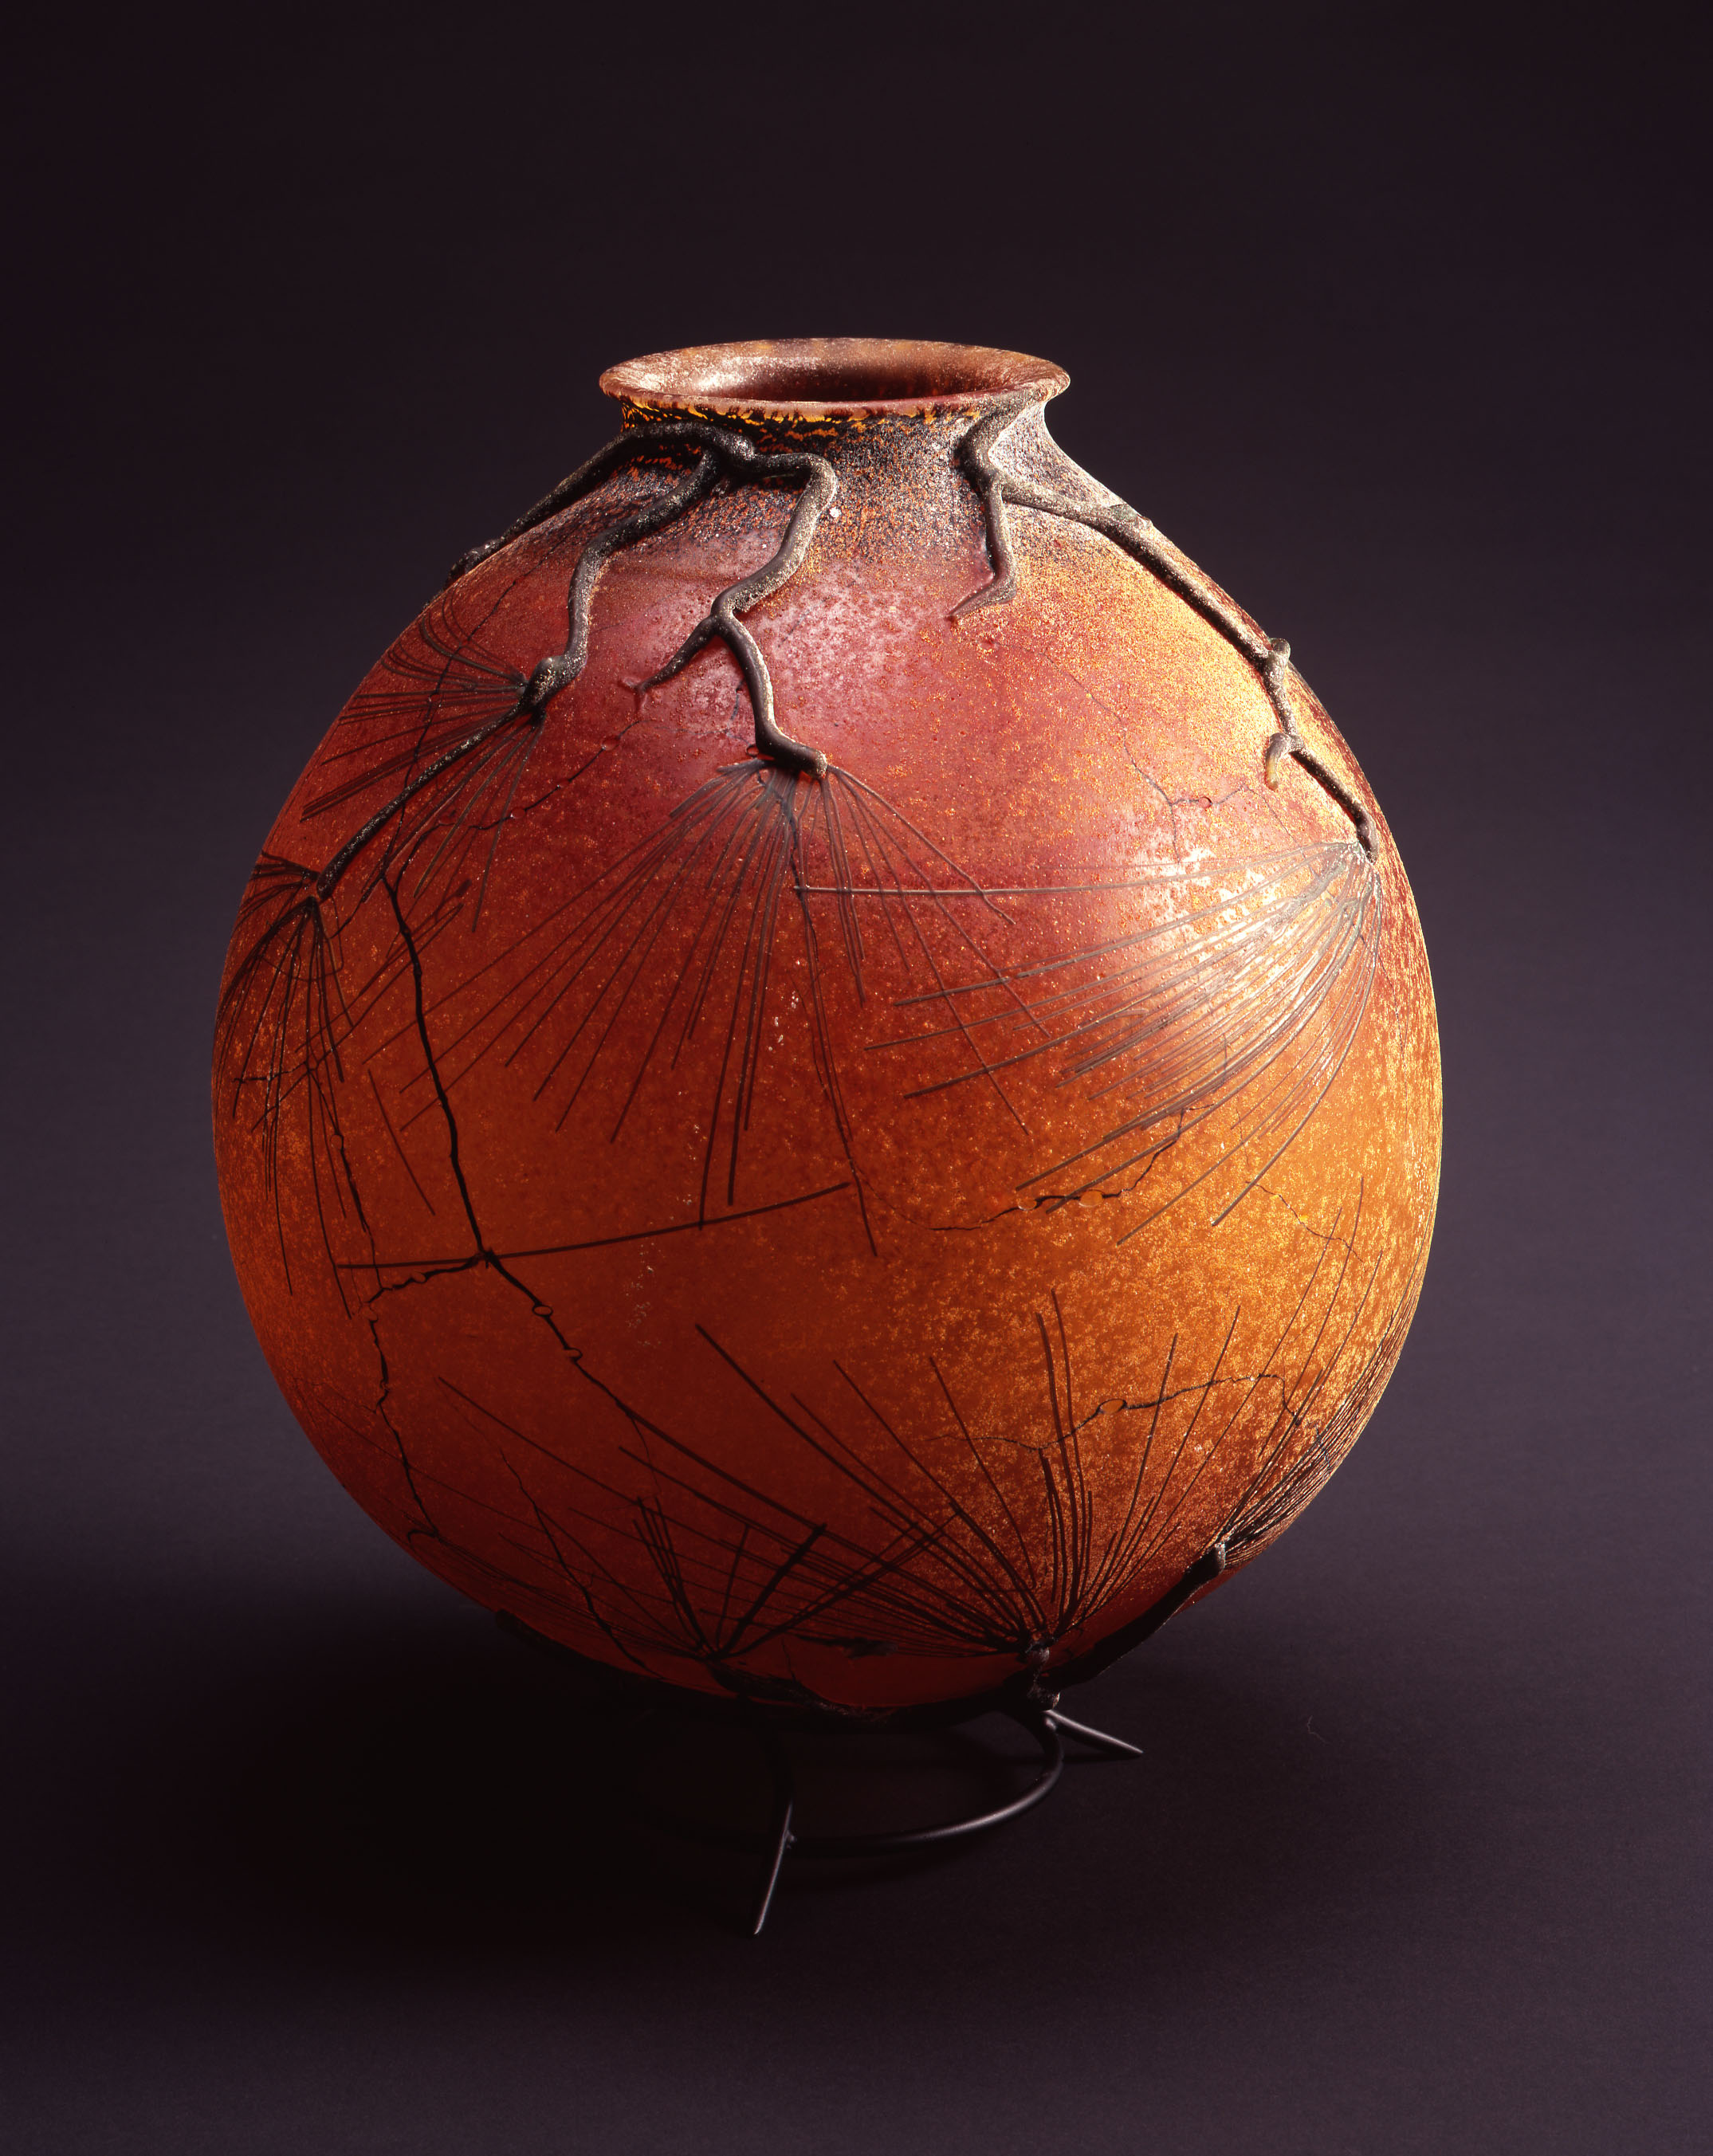  William Morris,&nbsp; Globe Vessel with Ponderosa Pine Boughs,&nbsp; (2004, glass, 14 1/8 x 12 x 12 inches), WM.41 